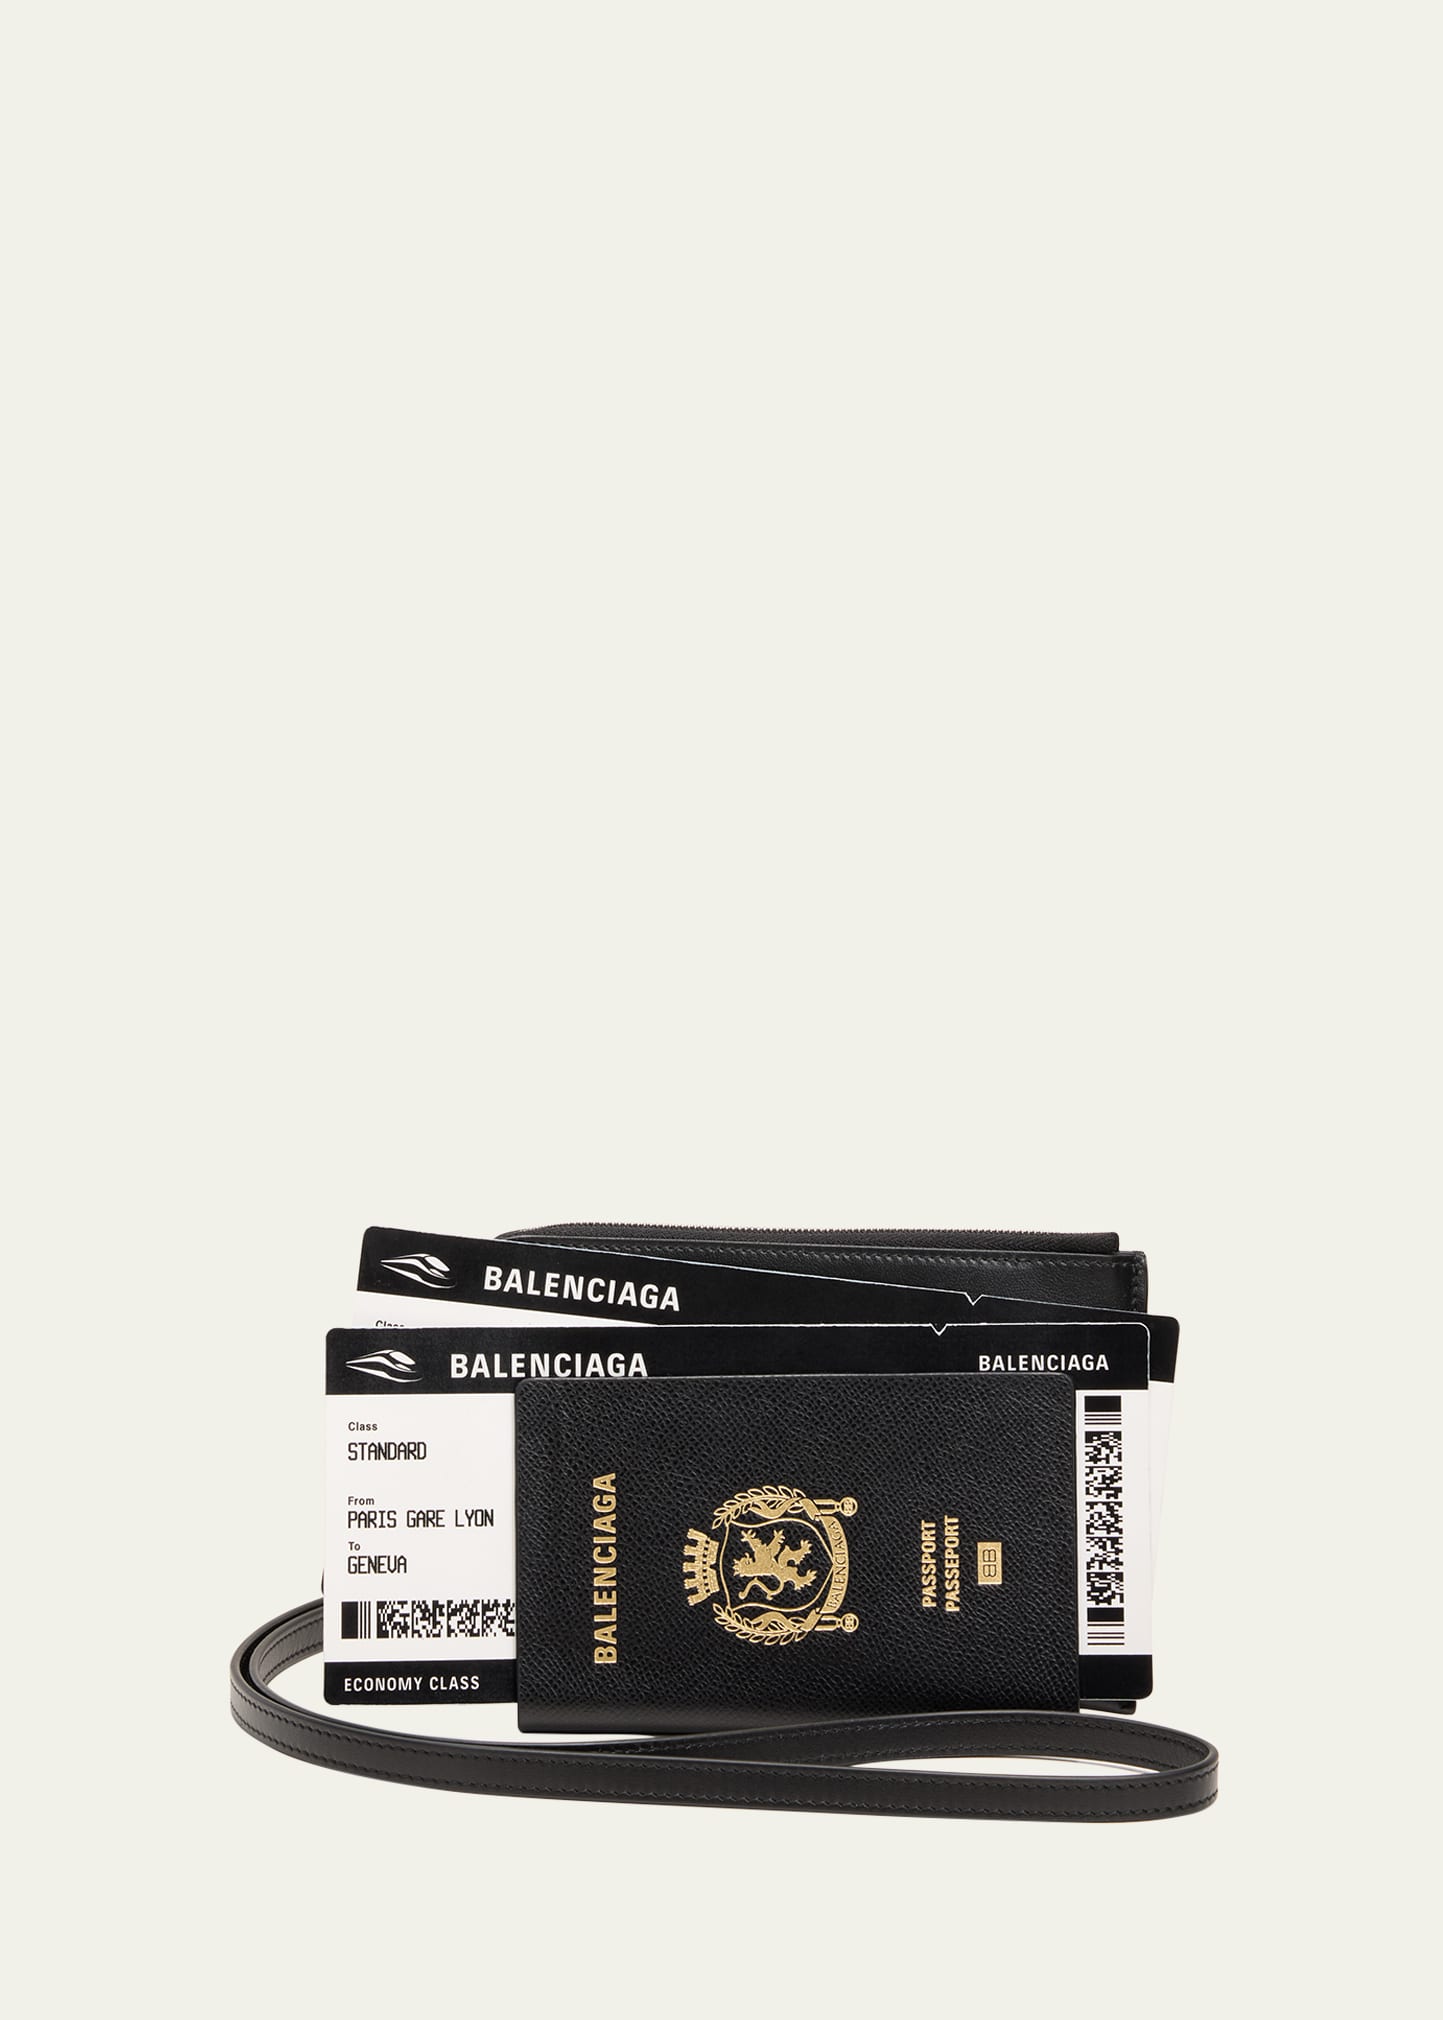 Balenciaga Men's Passport Zip Wallet with Strap - Bergdorf Goodman